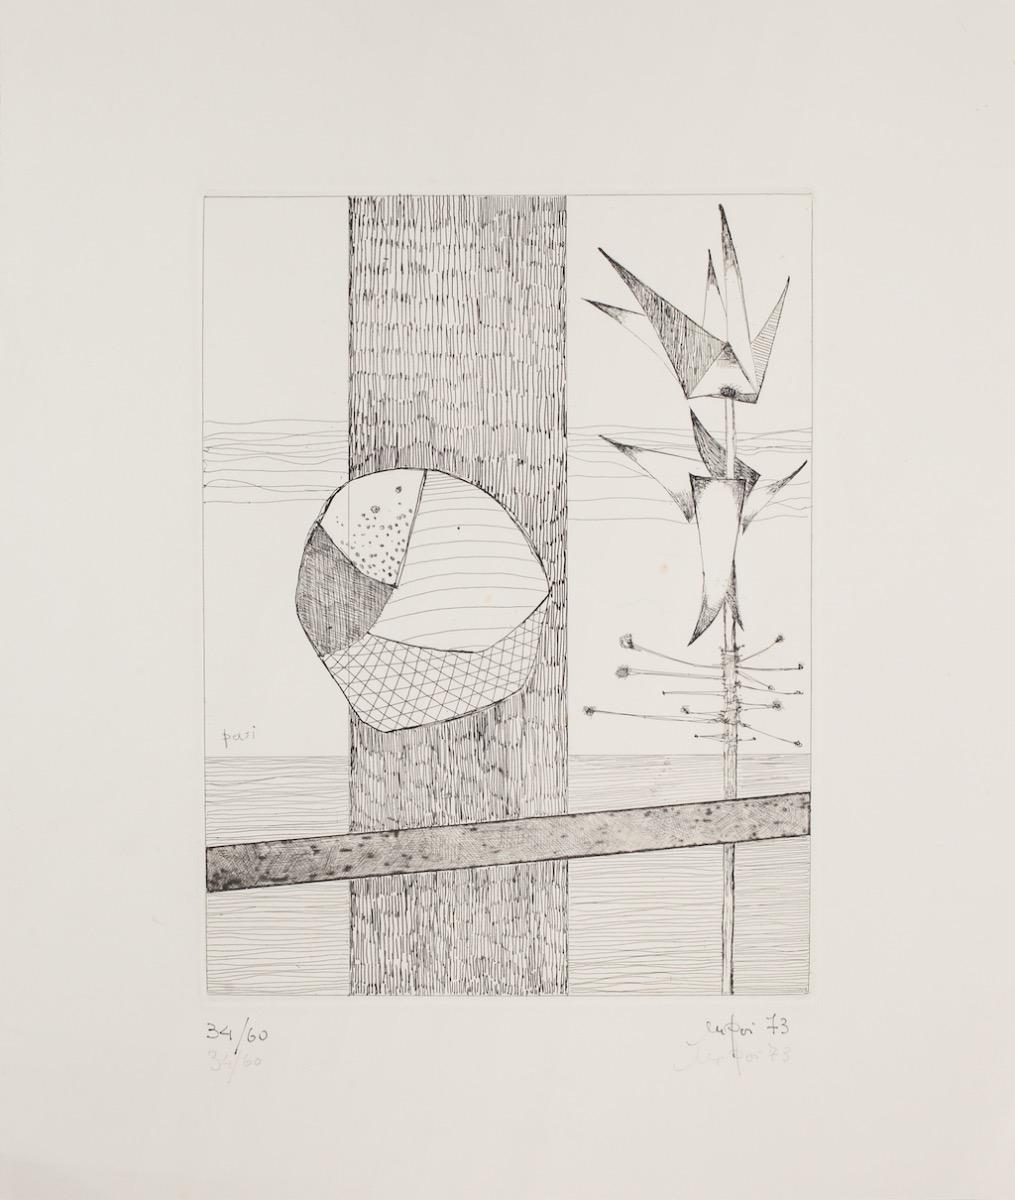 Composition - Original Etching by Rolando Persi - 1973